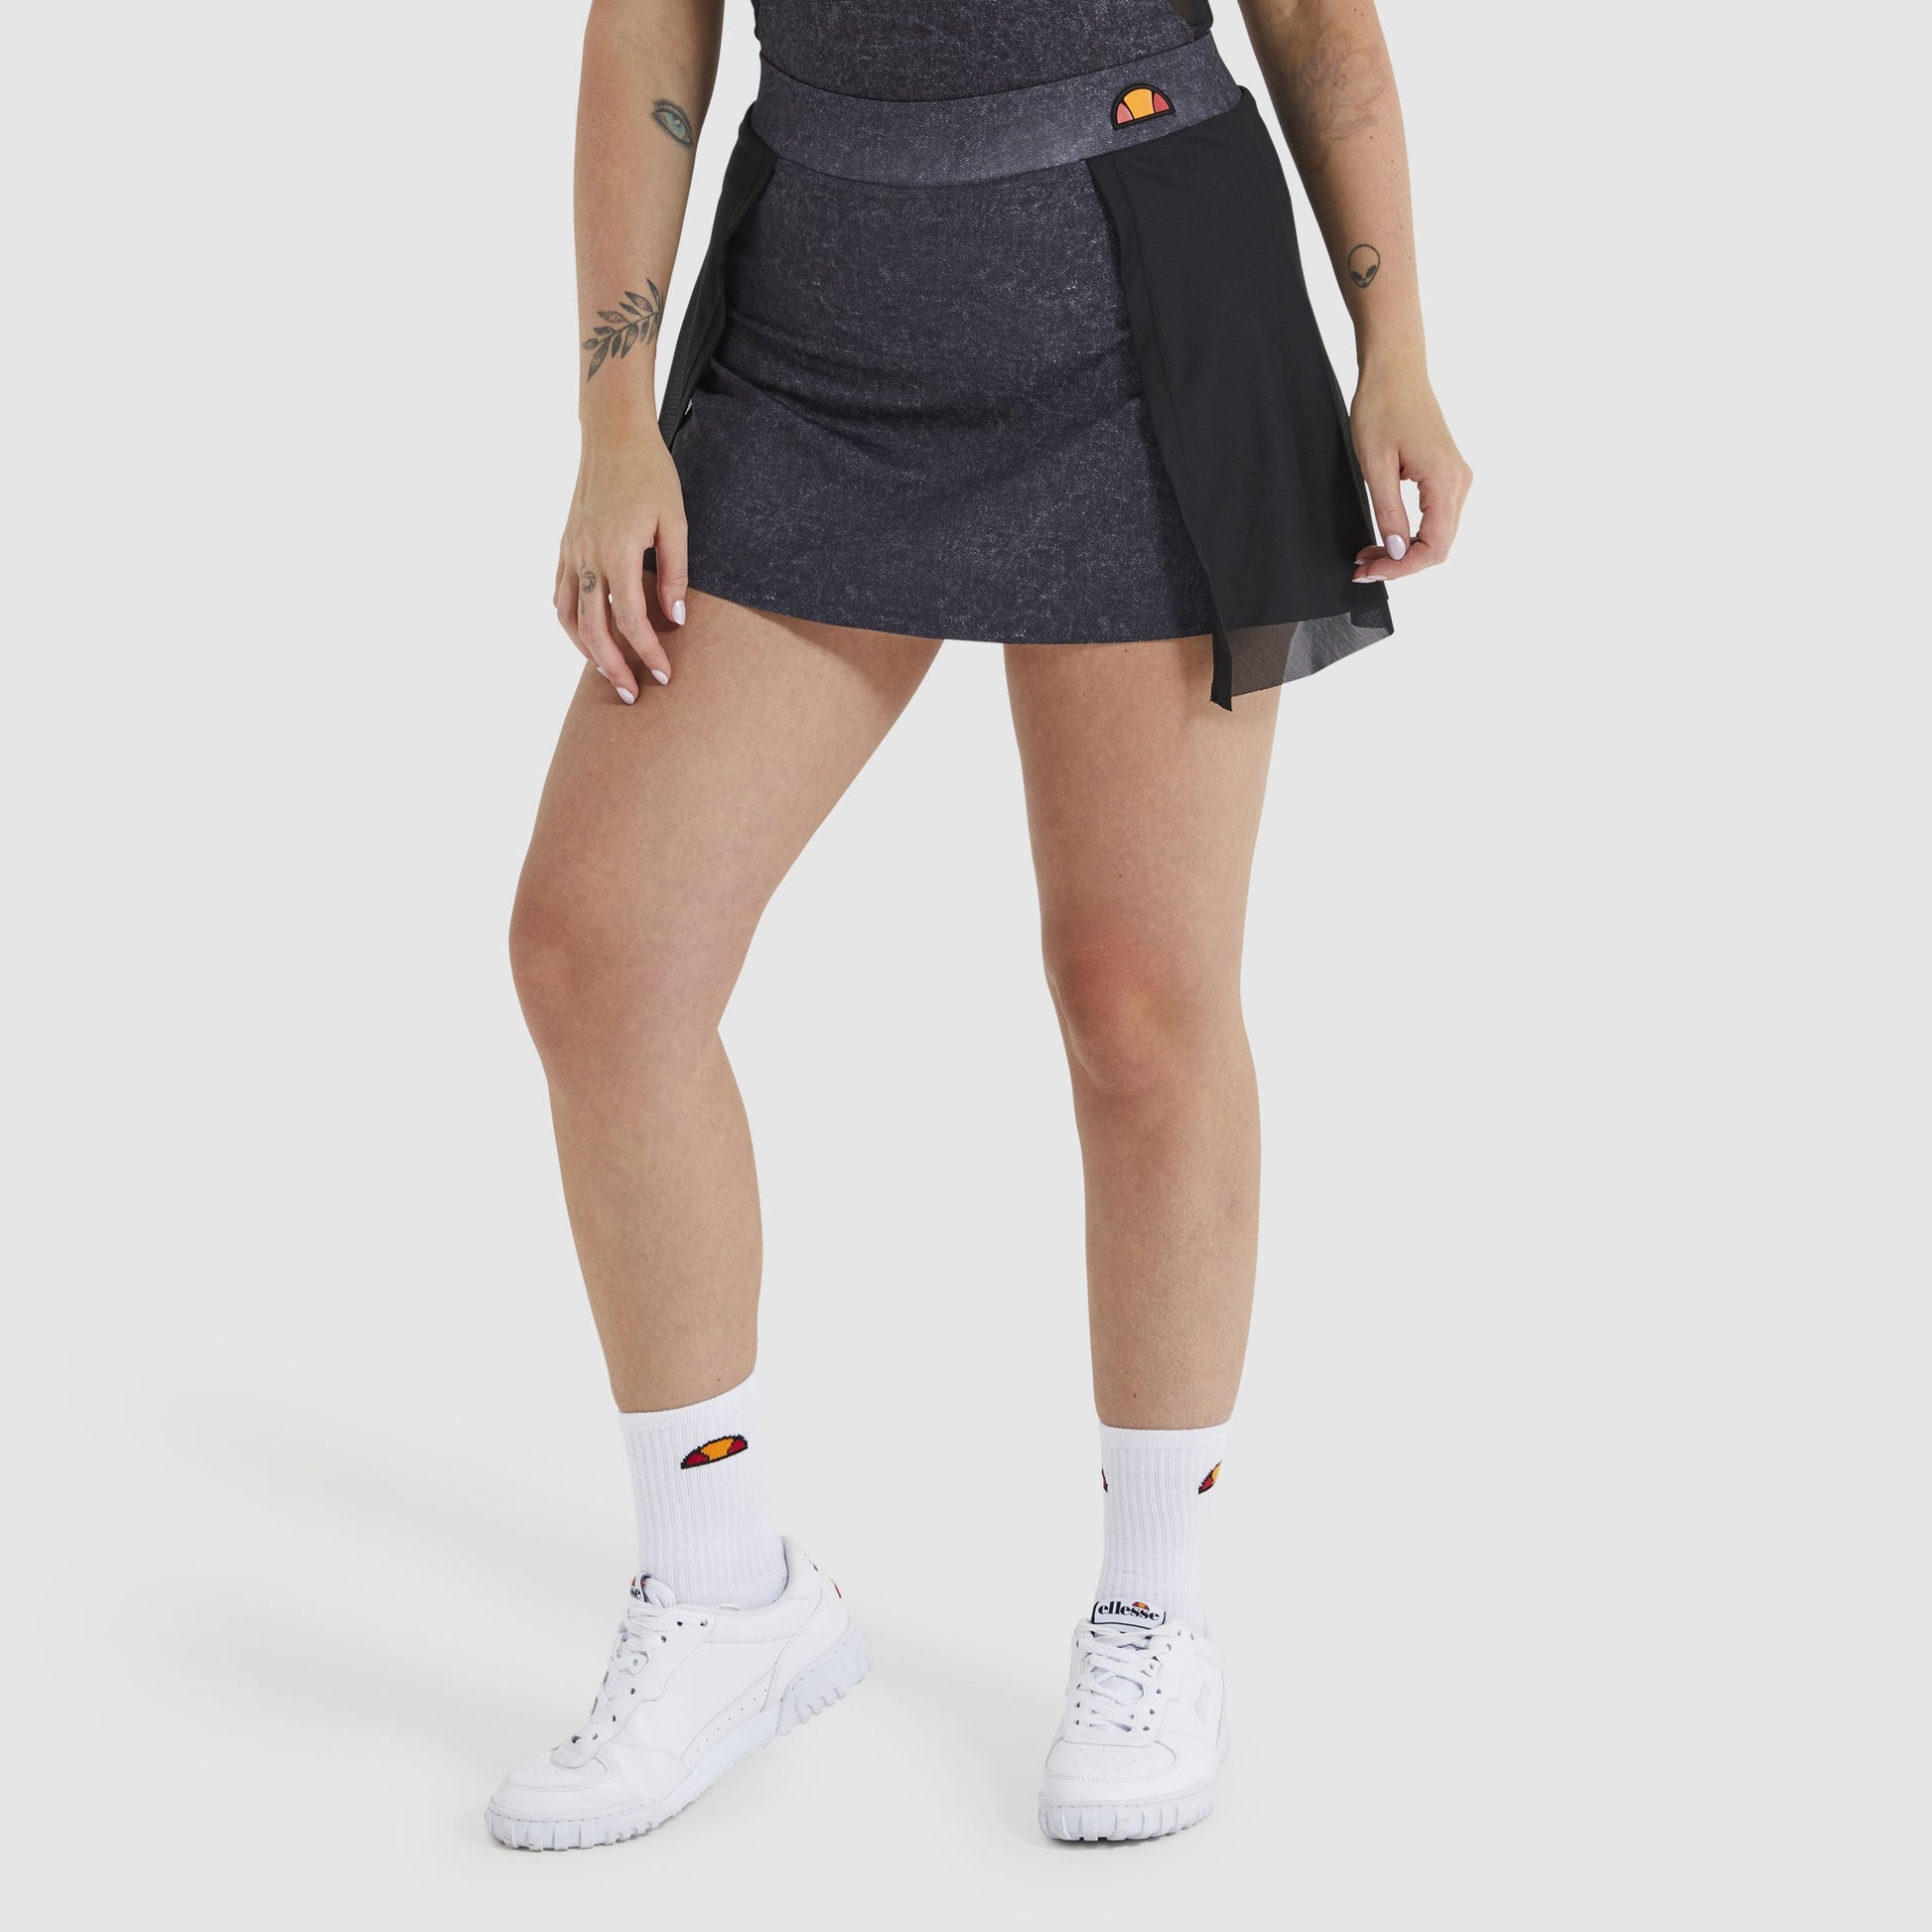 ellesse Tennis Women's Skort – NewCo Brands